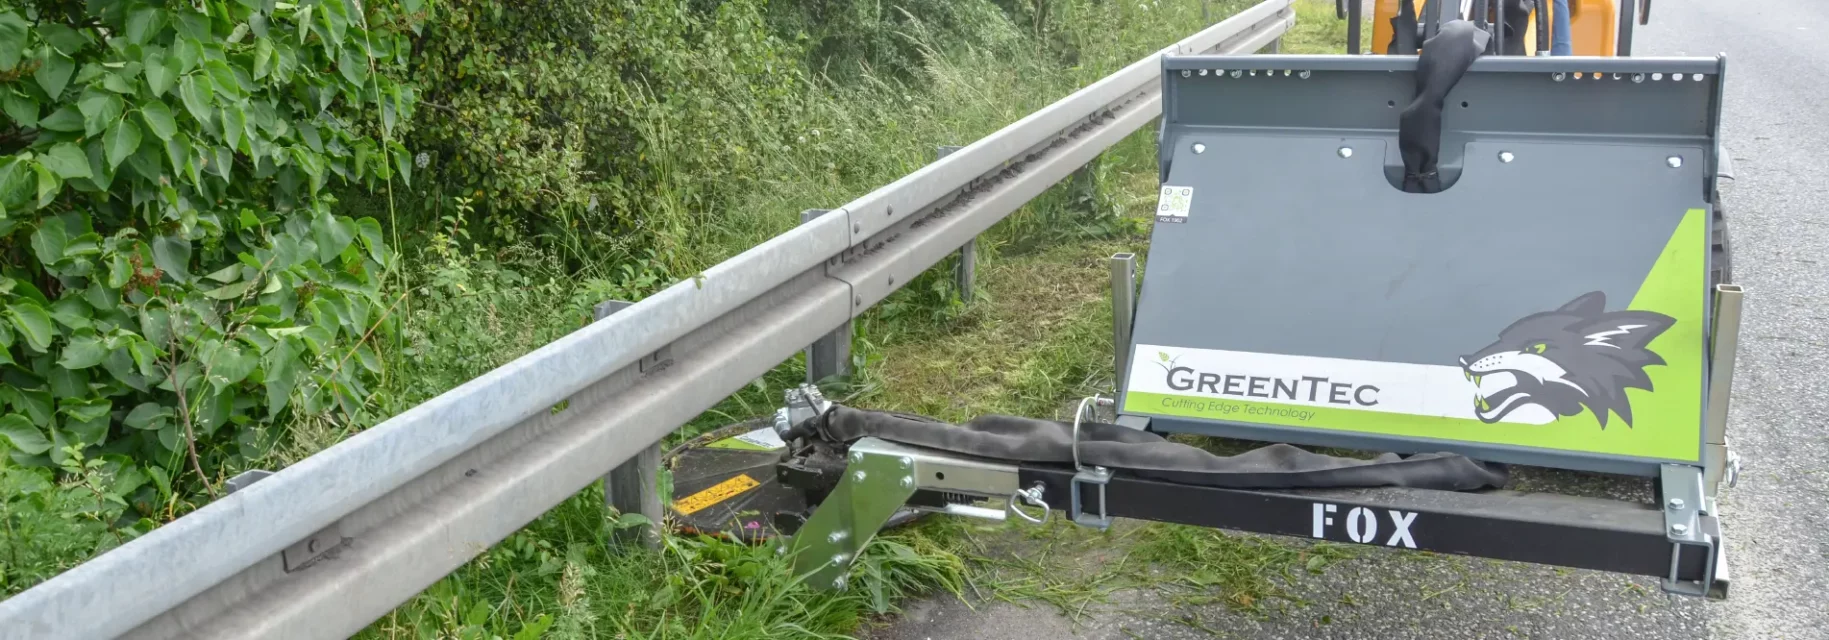 Guardrail mower that goes around posts